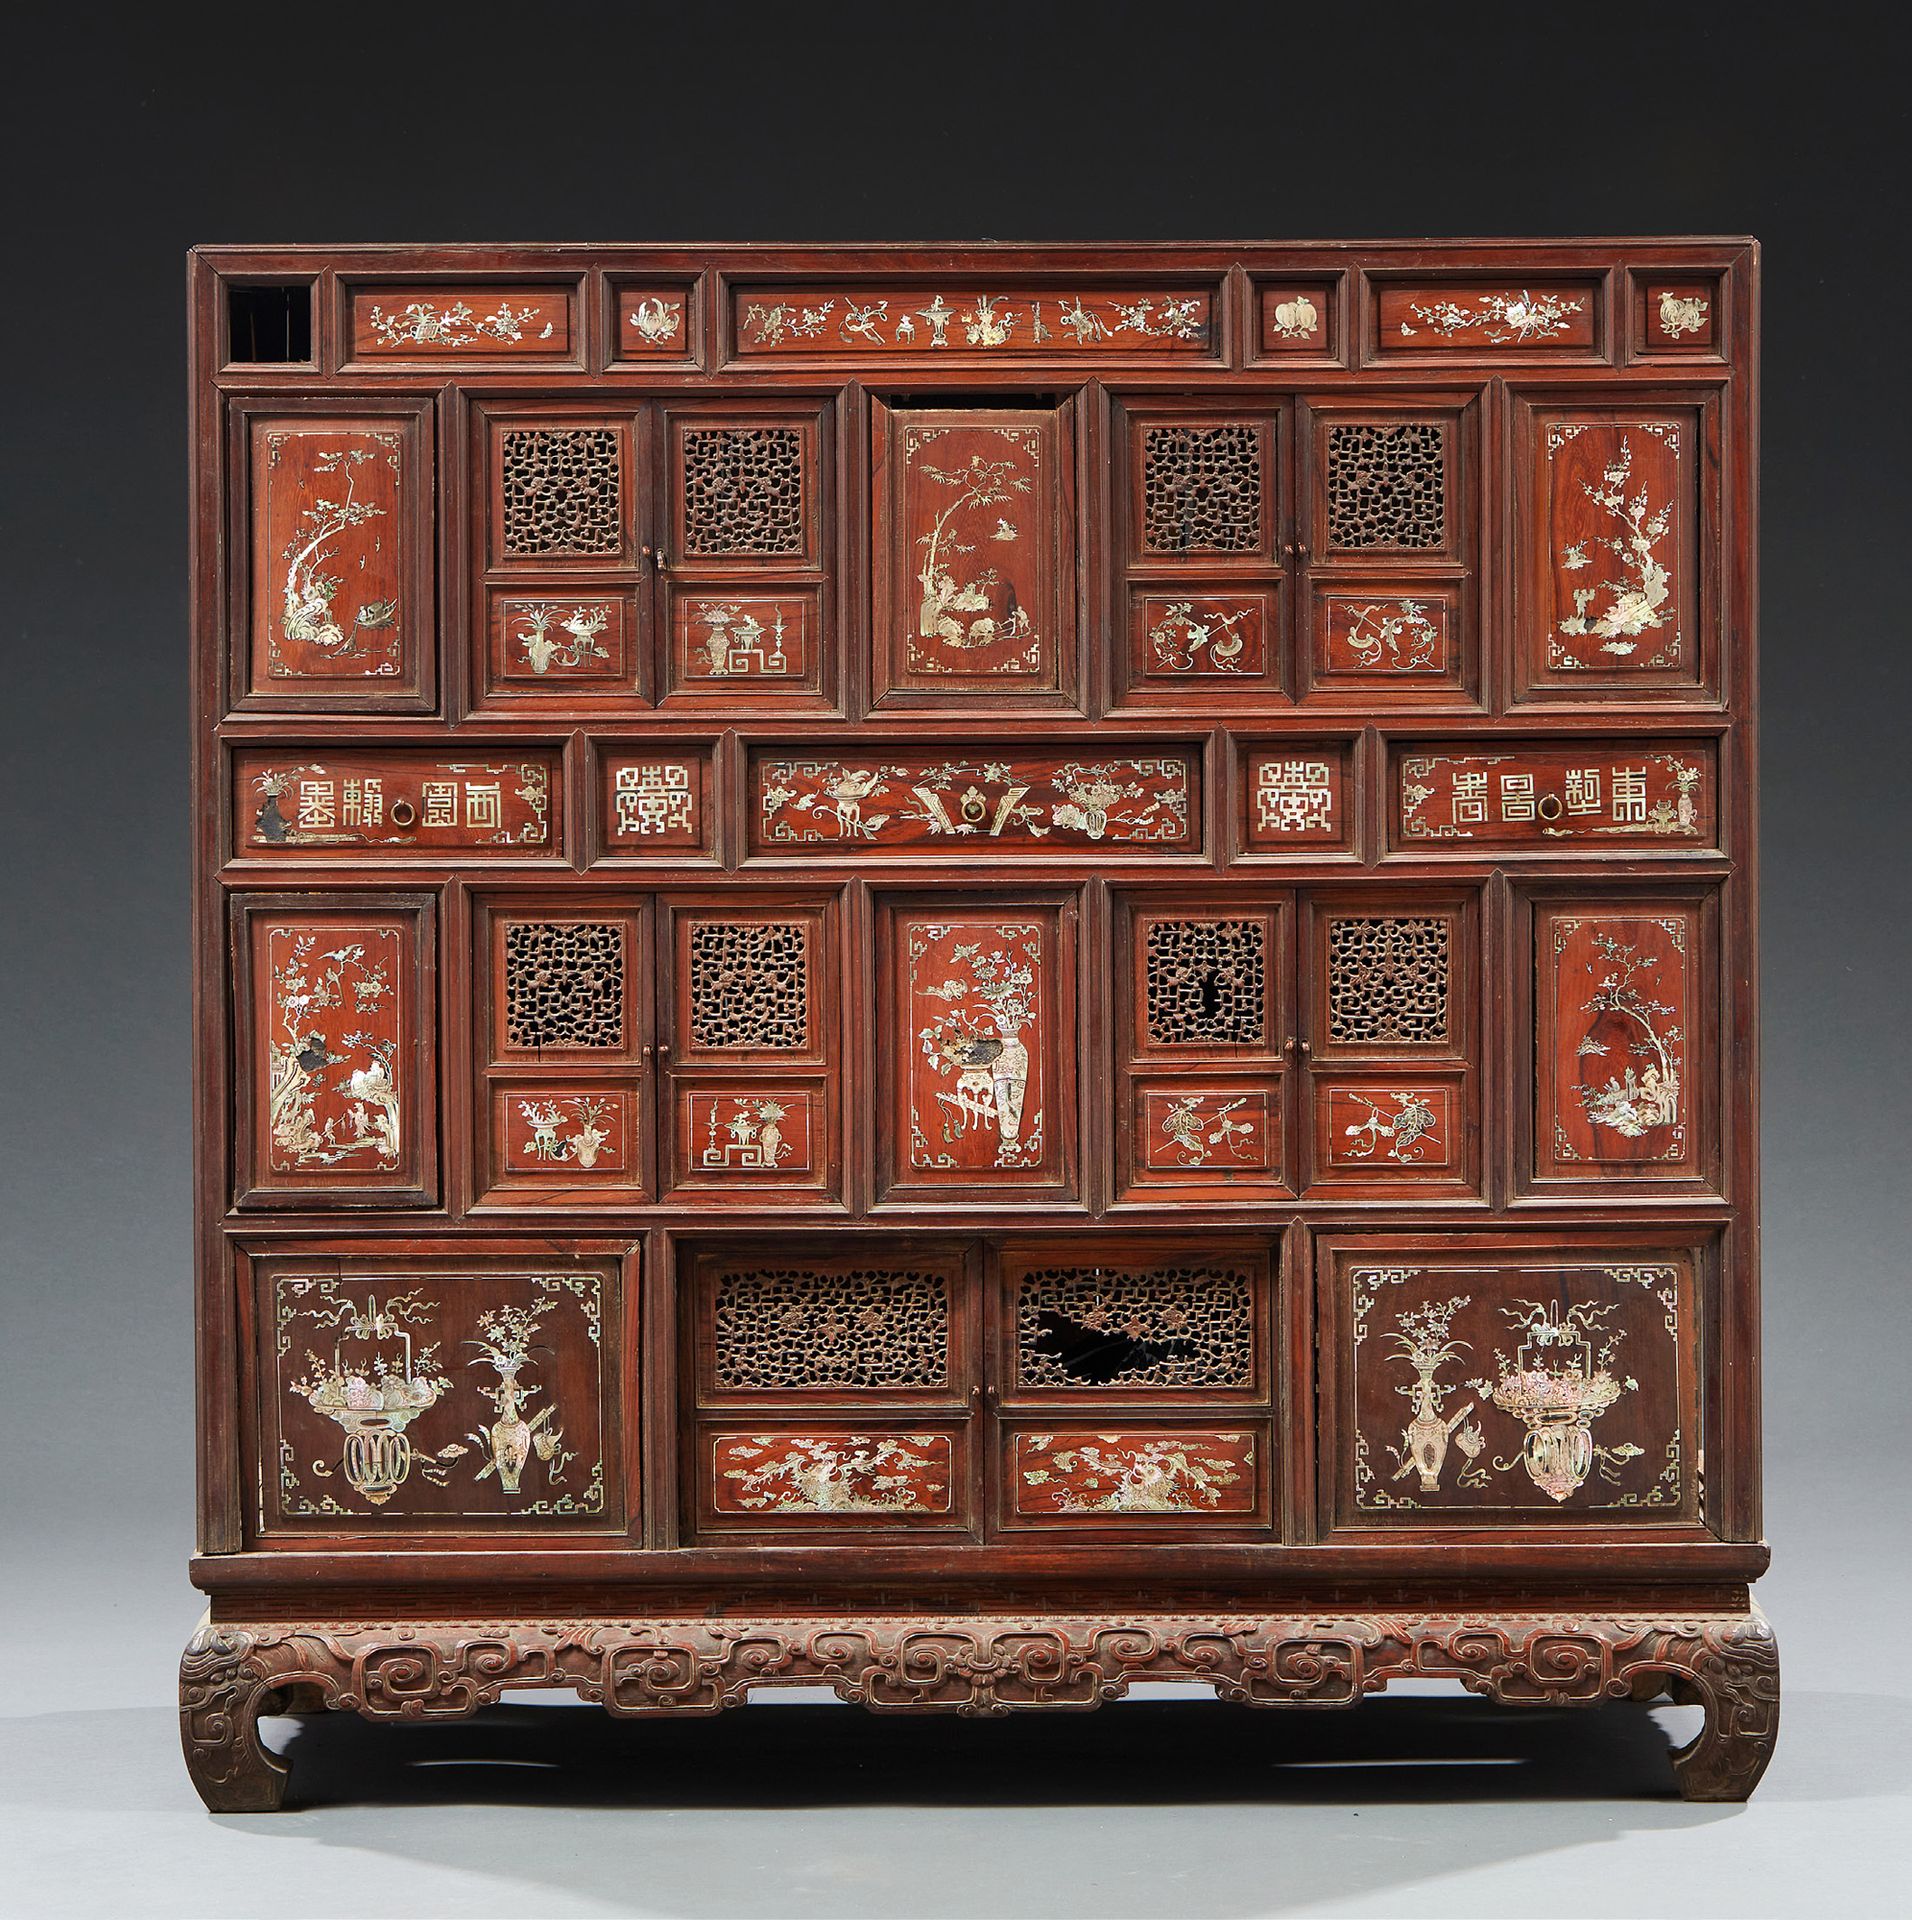 CHINE 雕花木柜，镂空，嵌有珍珠母。
19世纪晚期 尺寸：104 x 103.5 x 47.5厘米